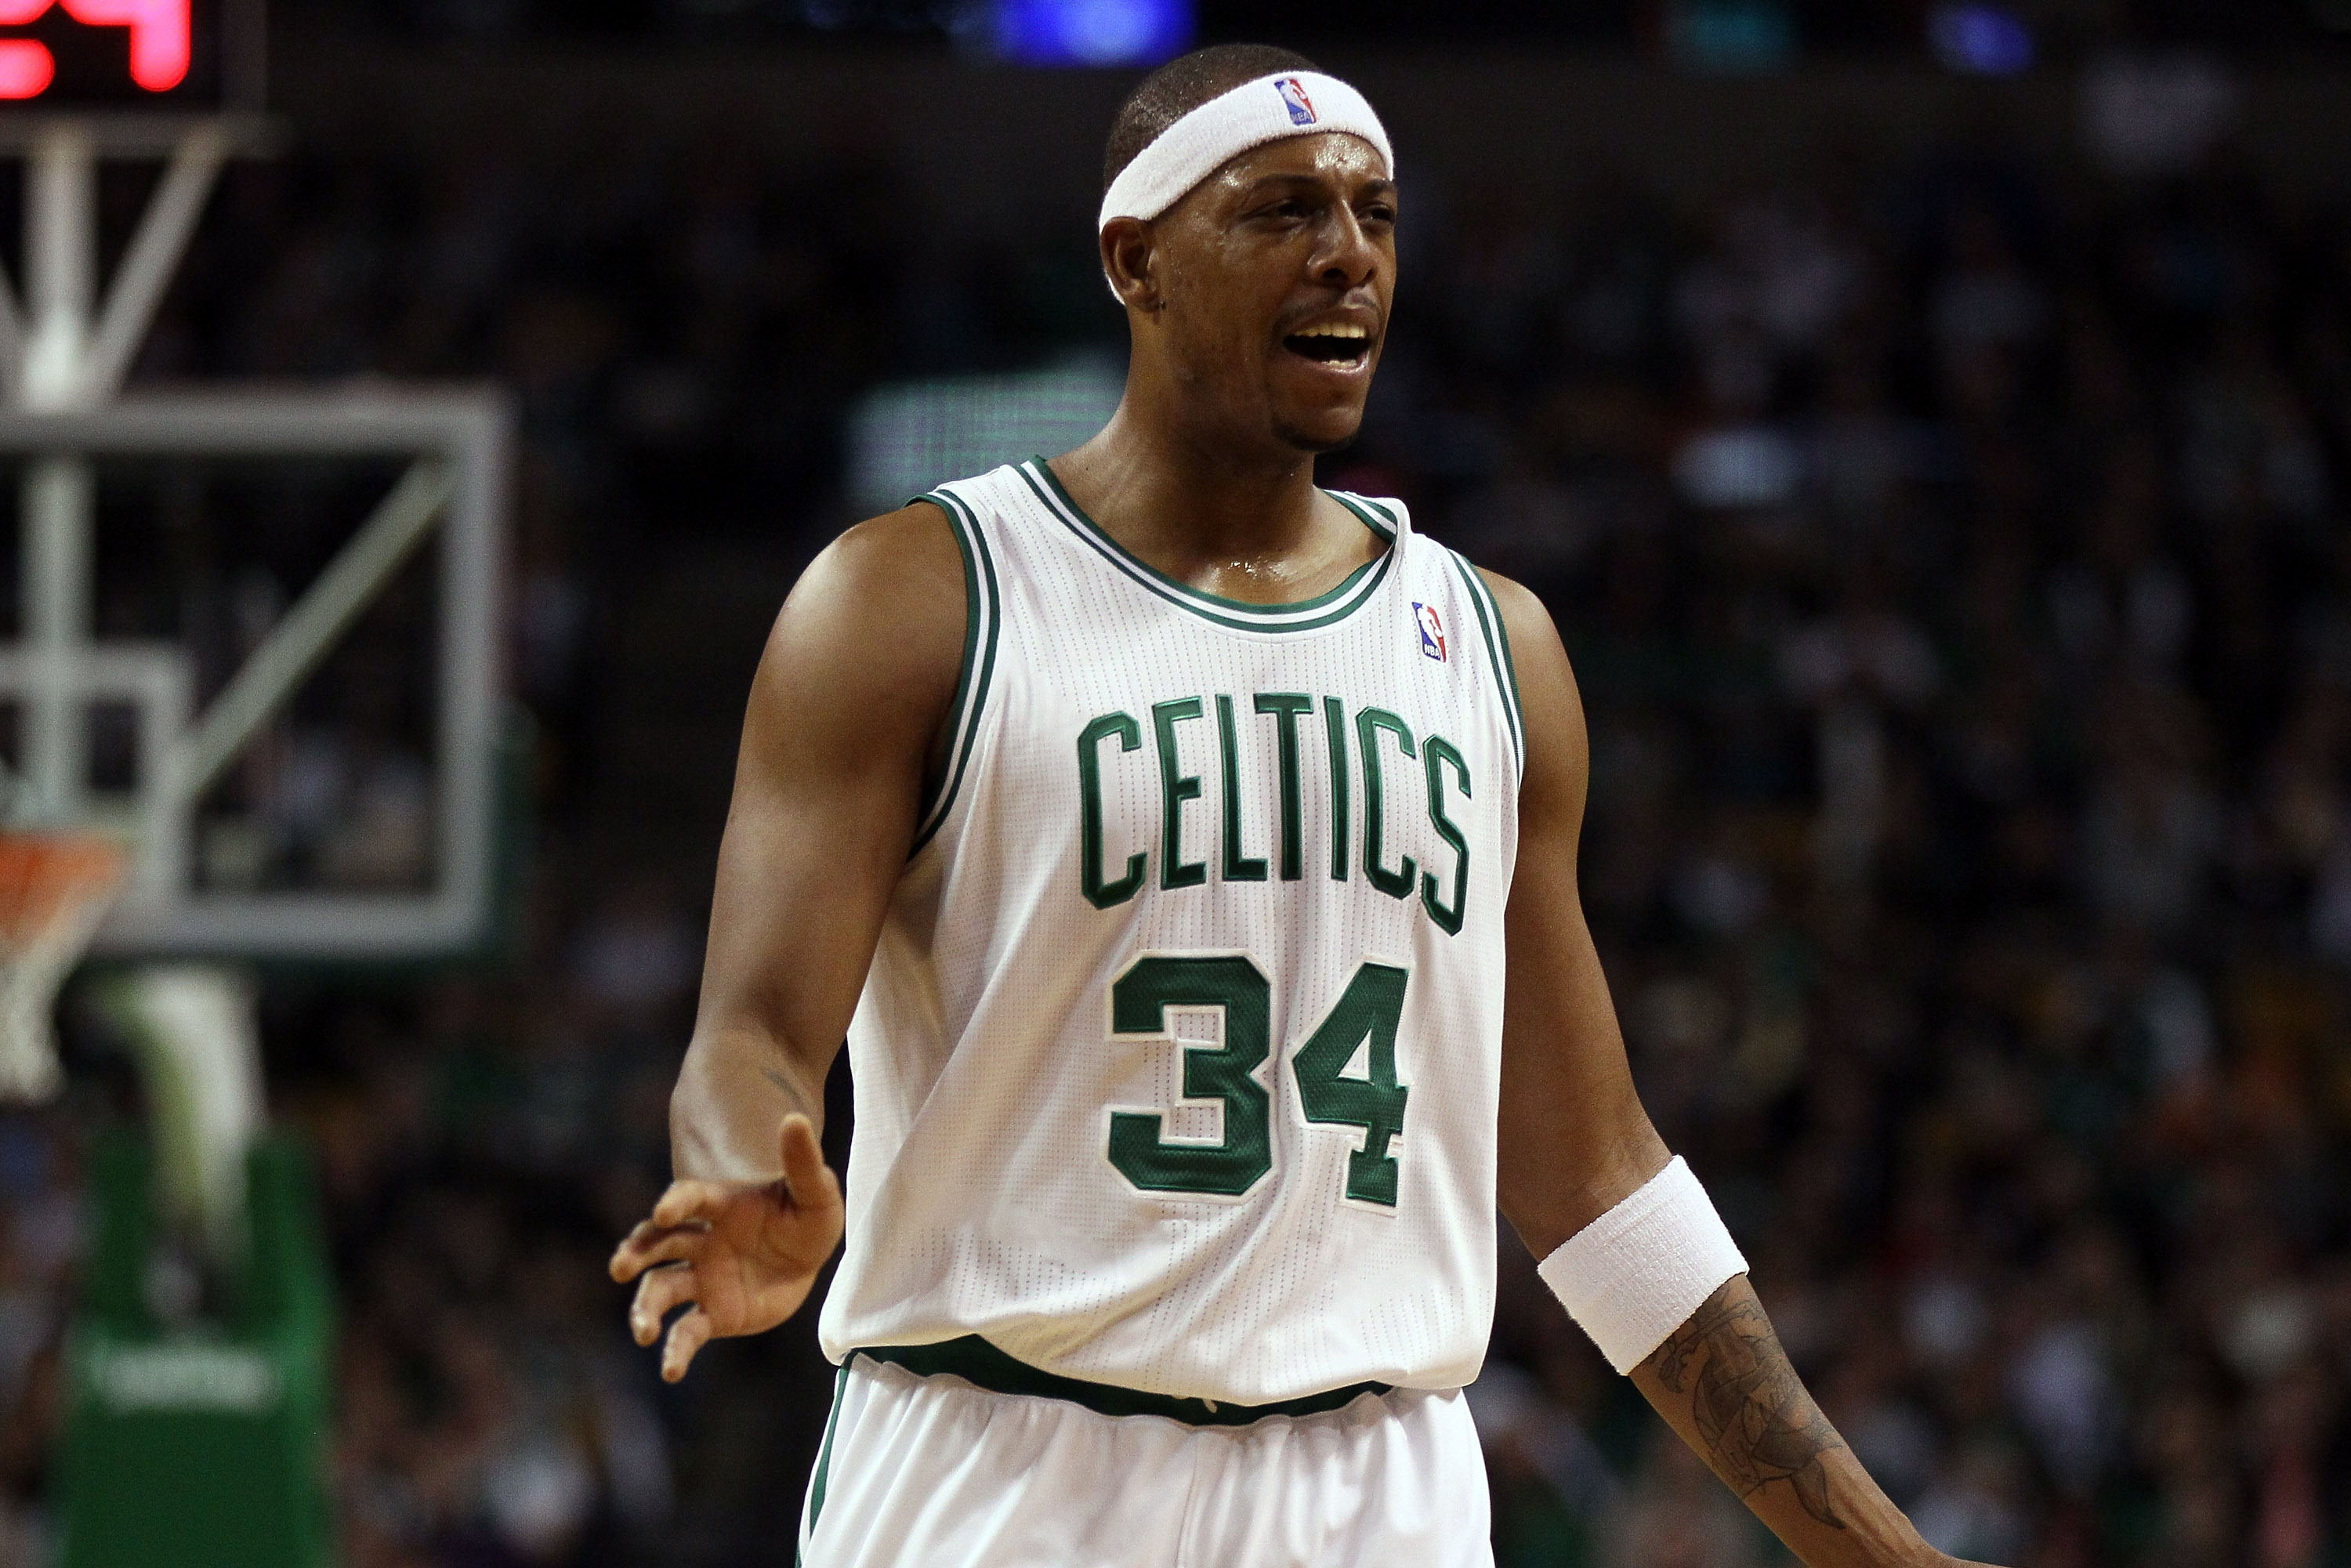 Paul Pierce believes Celtics will next retire Kevin Garnett's